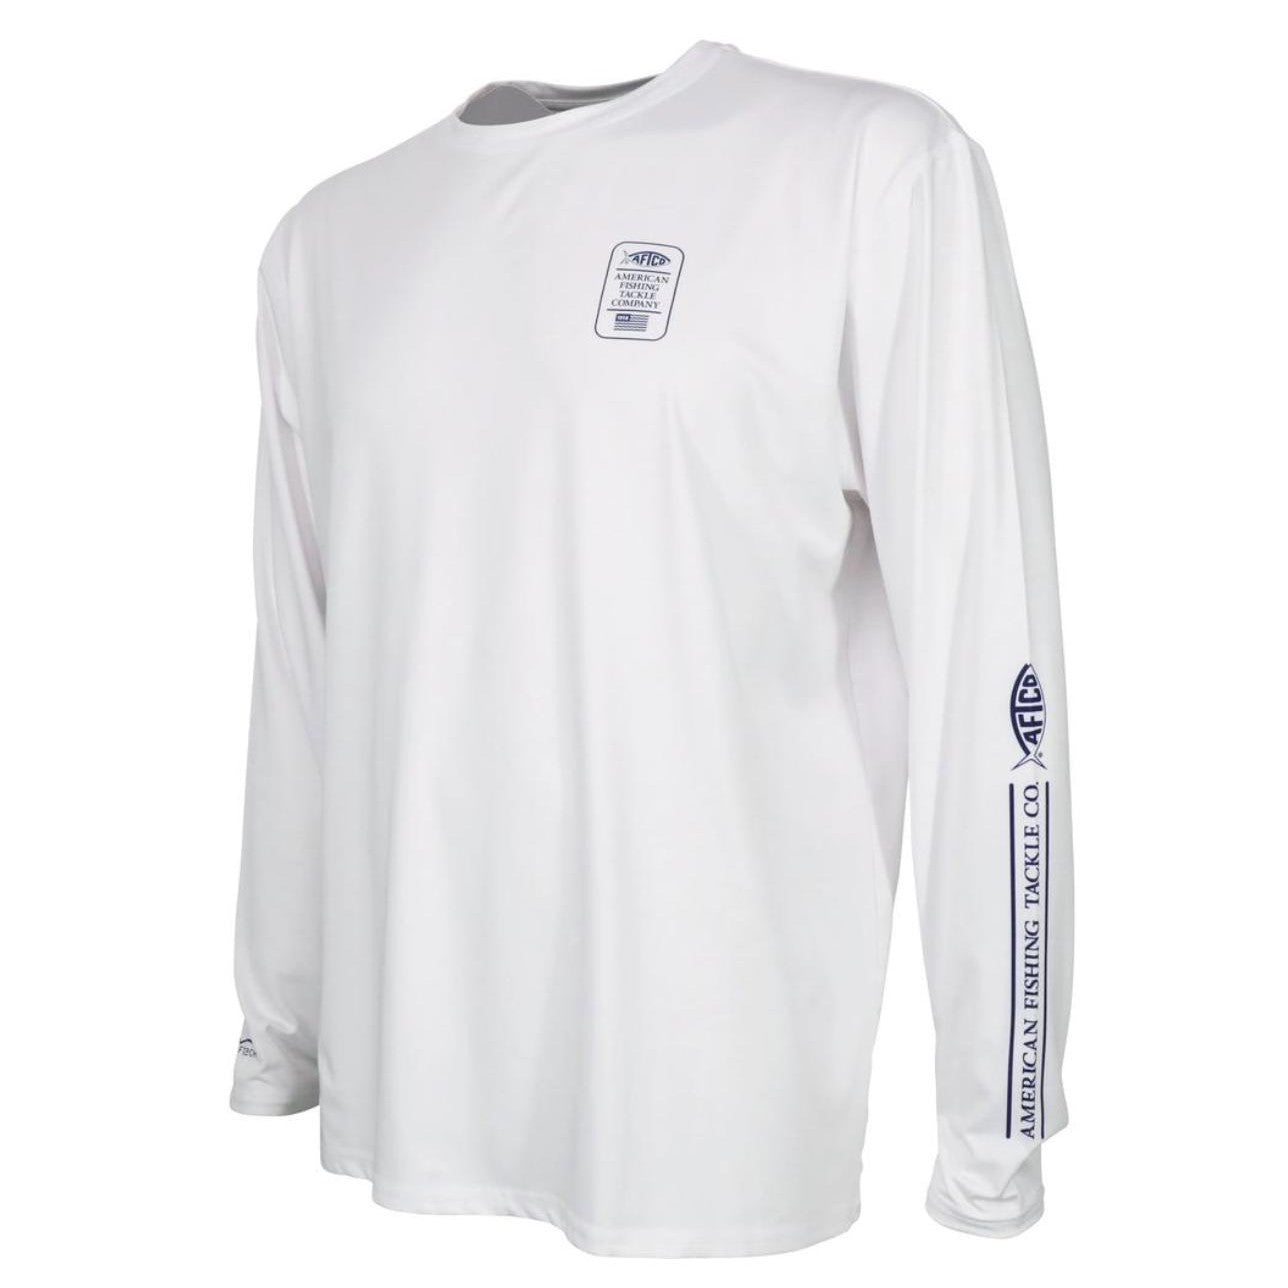 Aftco Wingman LS Performance Shirt - White